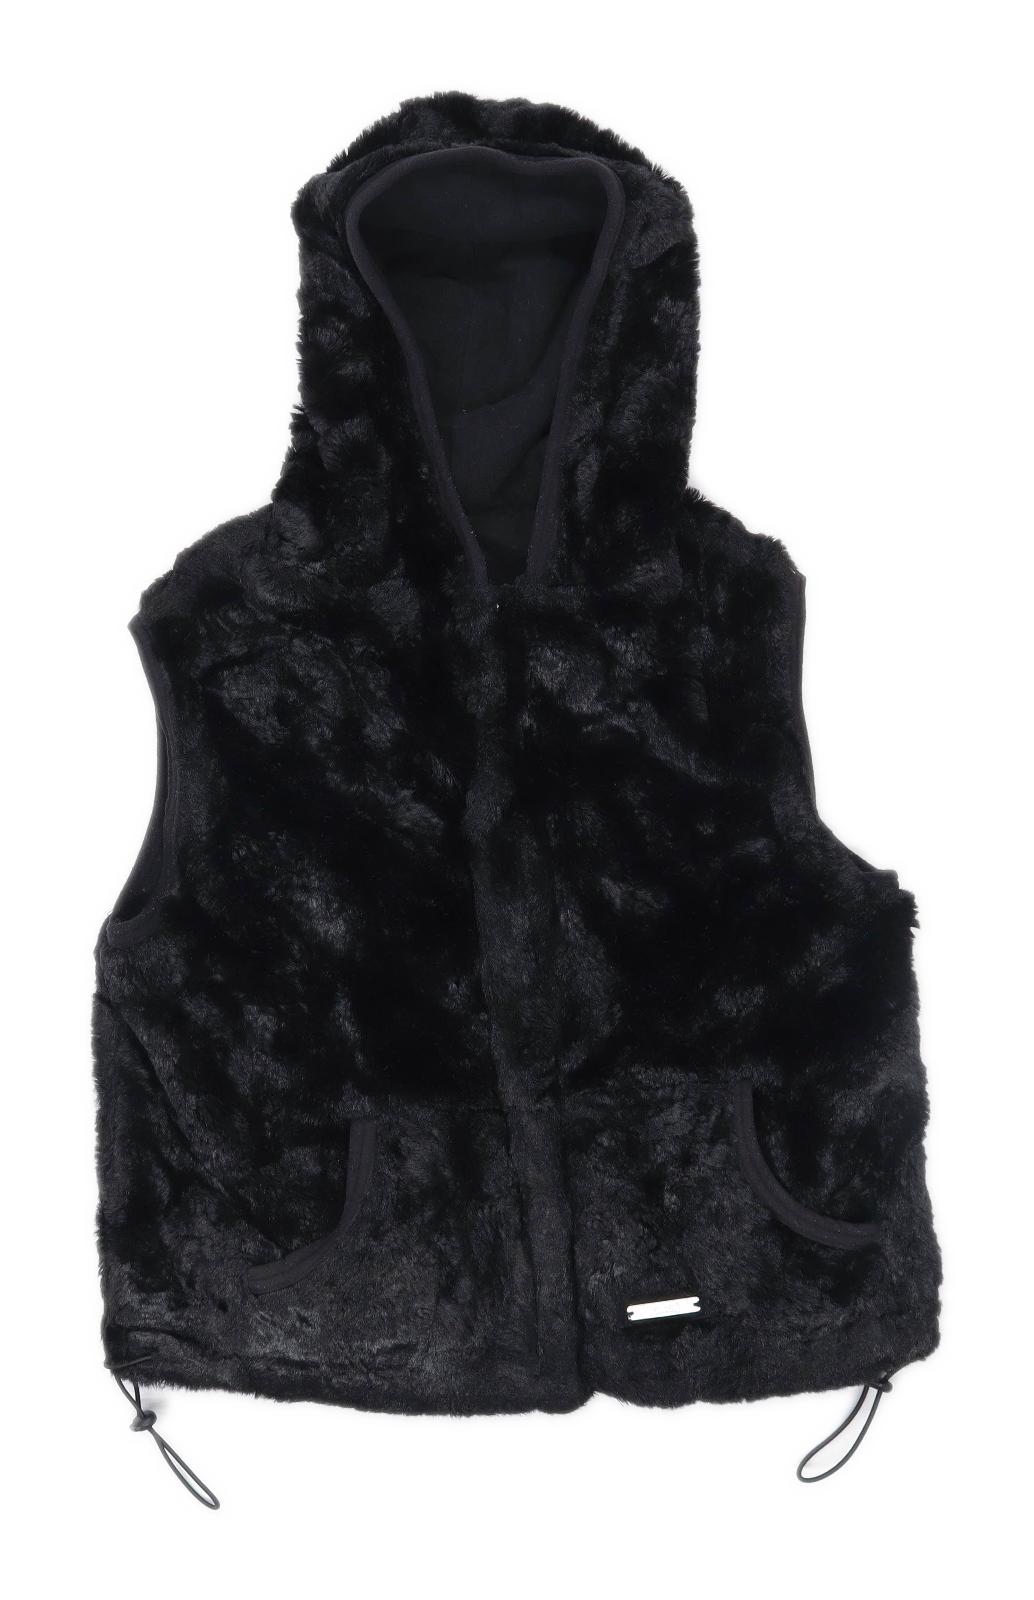 USA Pro Womens Size S Fleece Black Hooded Gilet